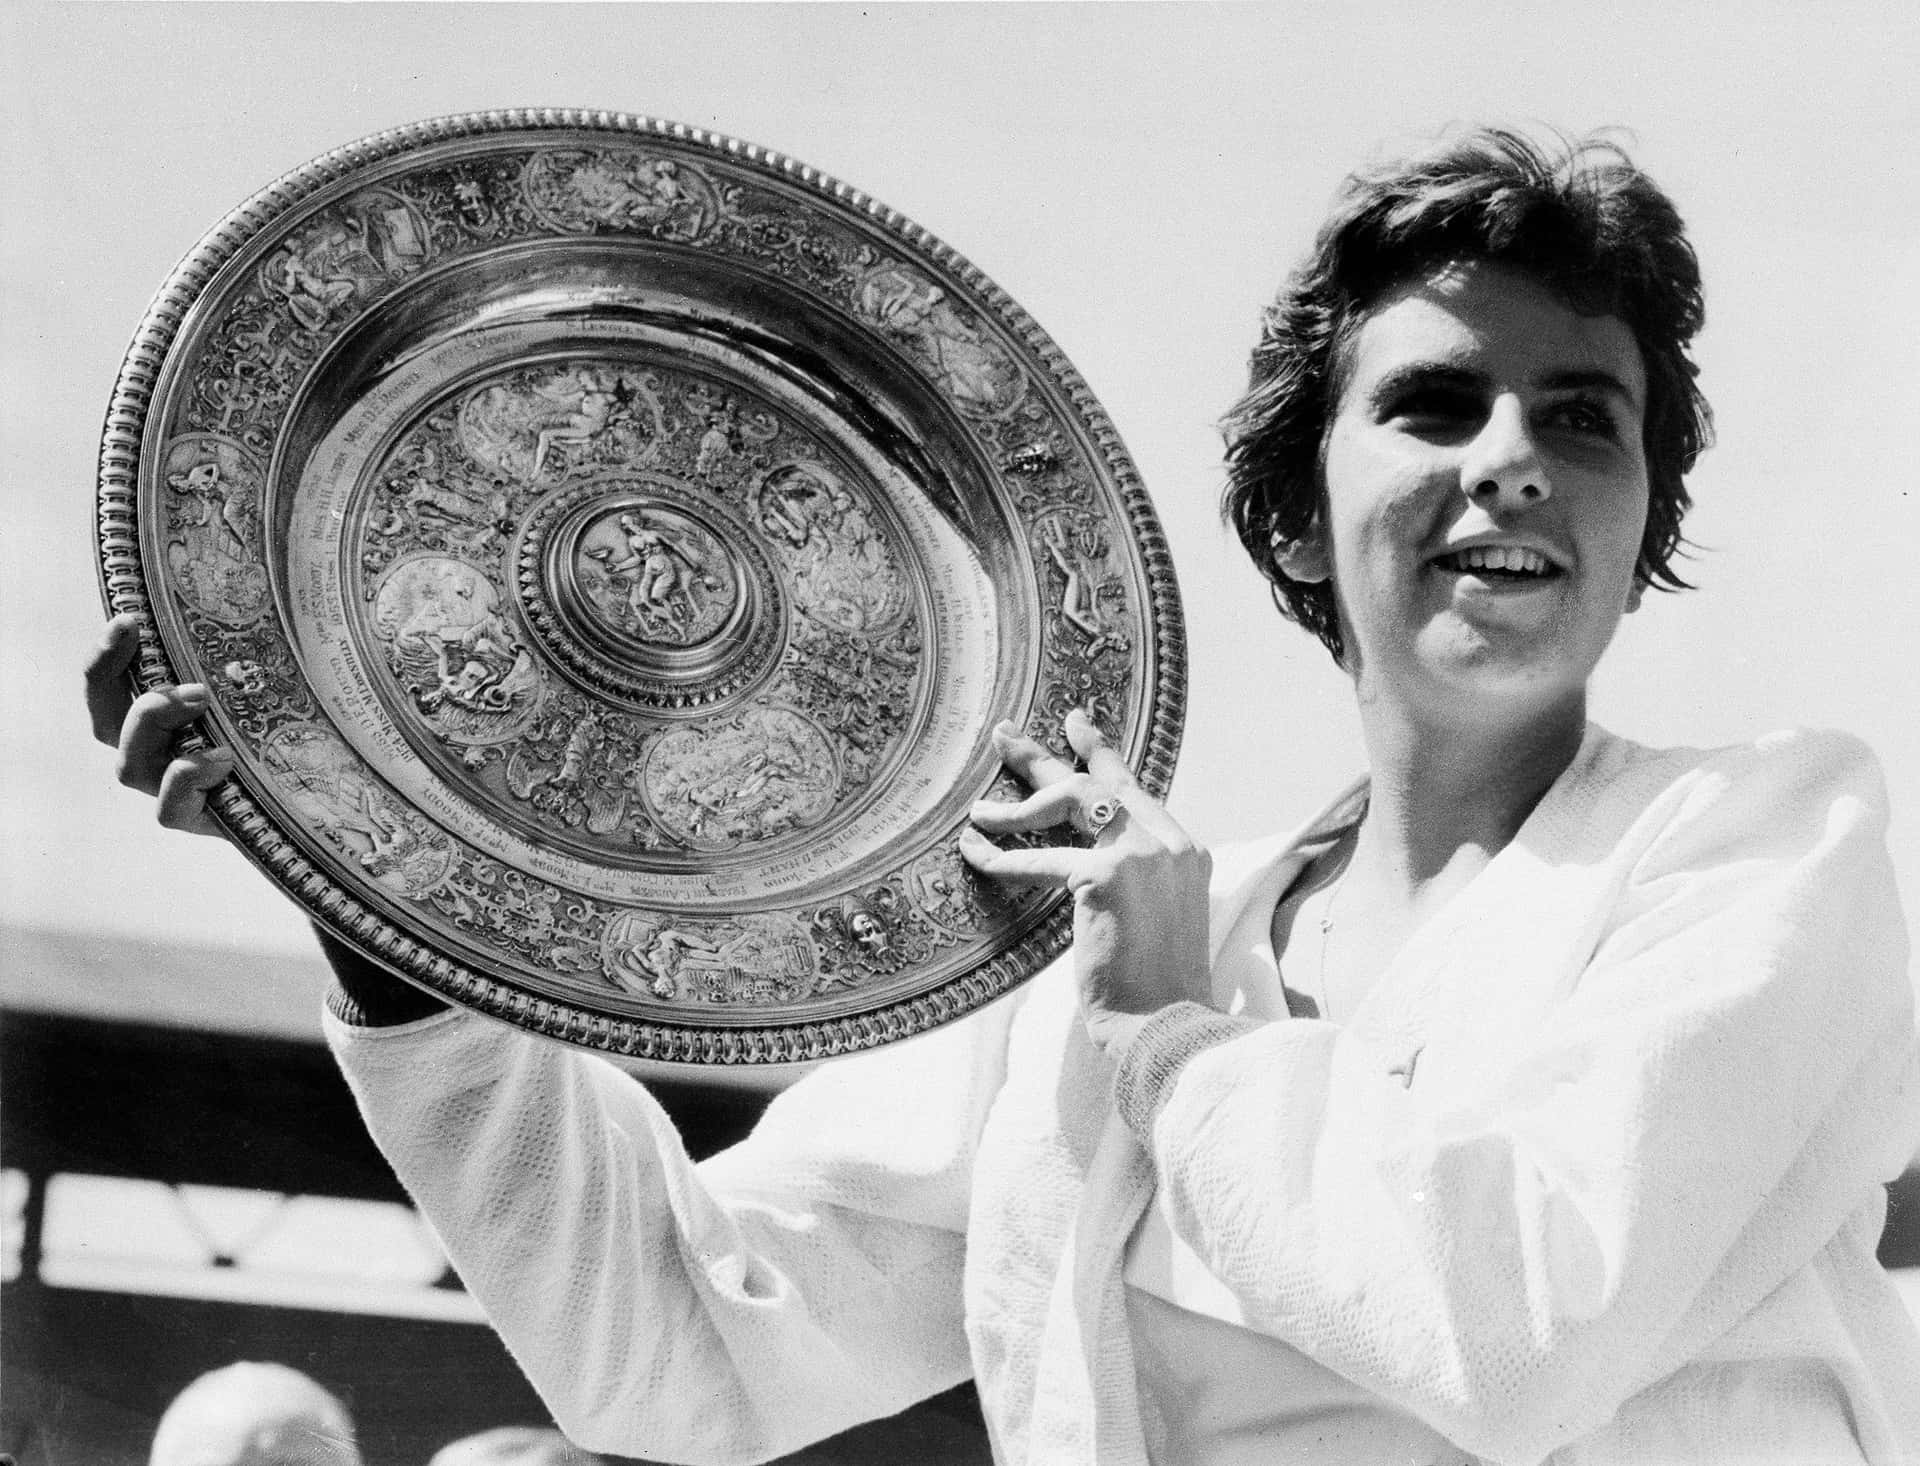 Legendary tennis player Maria Bueno triumphantly holding the Venus Rosewater Dish Wallpaper